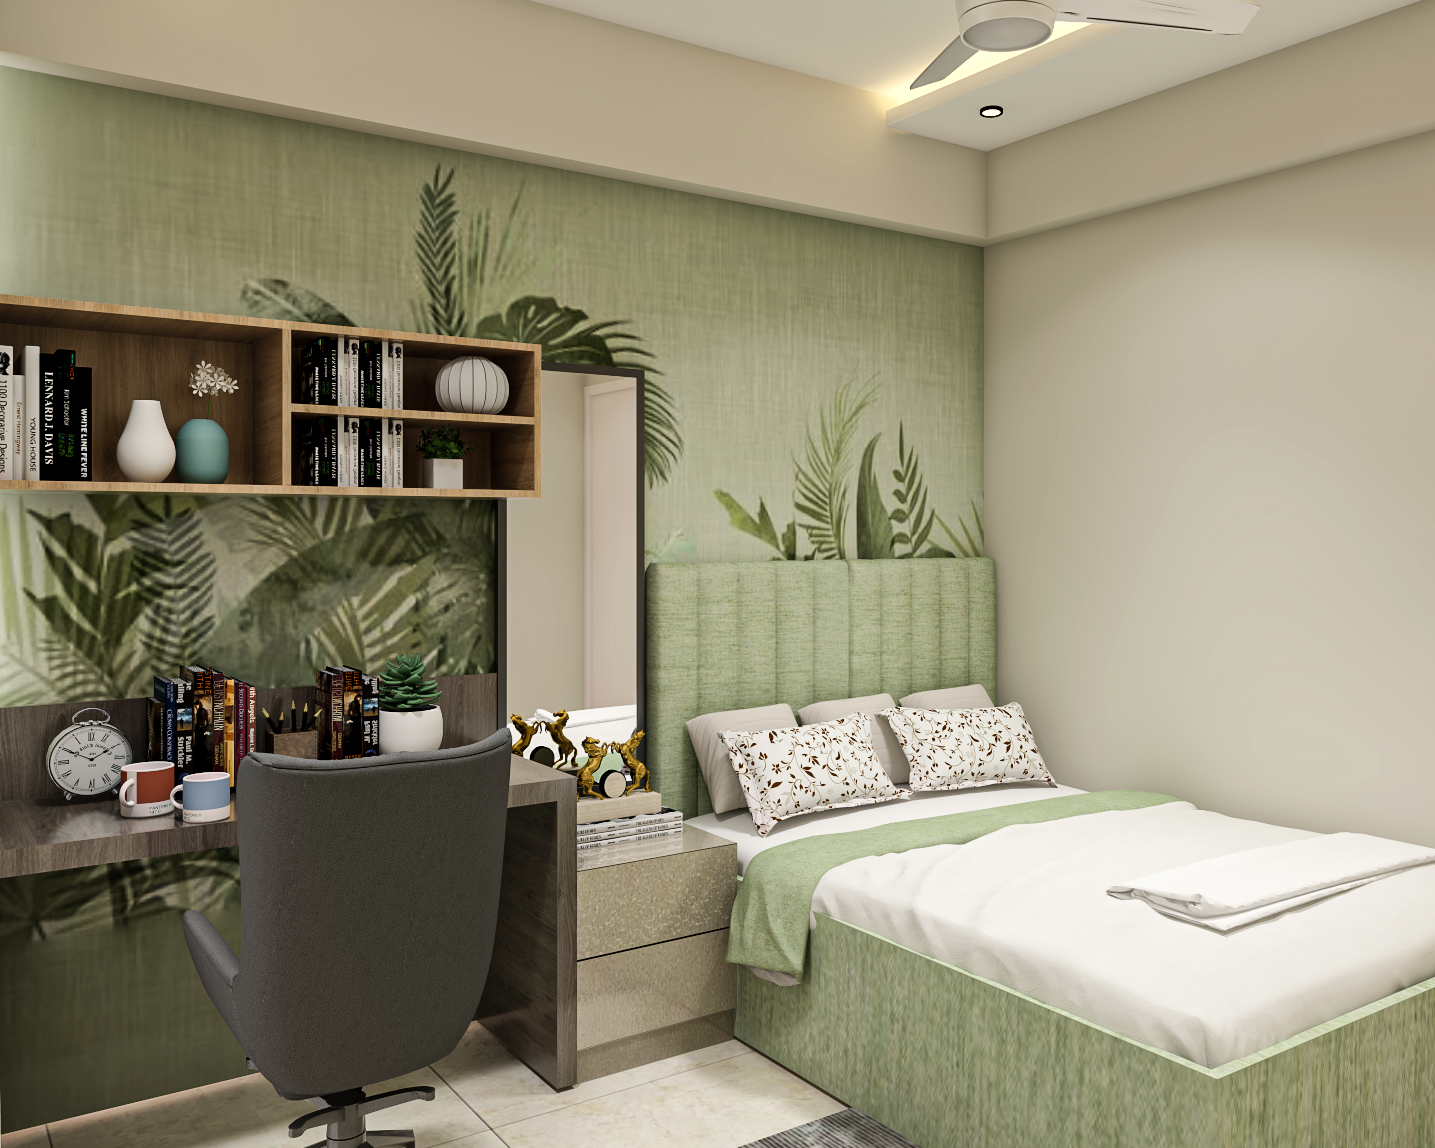 Tropical Themed Kids Bedroom Design In Green